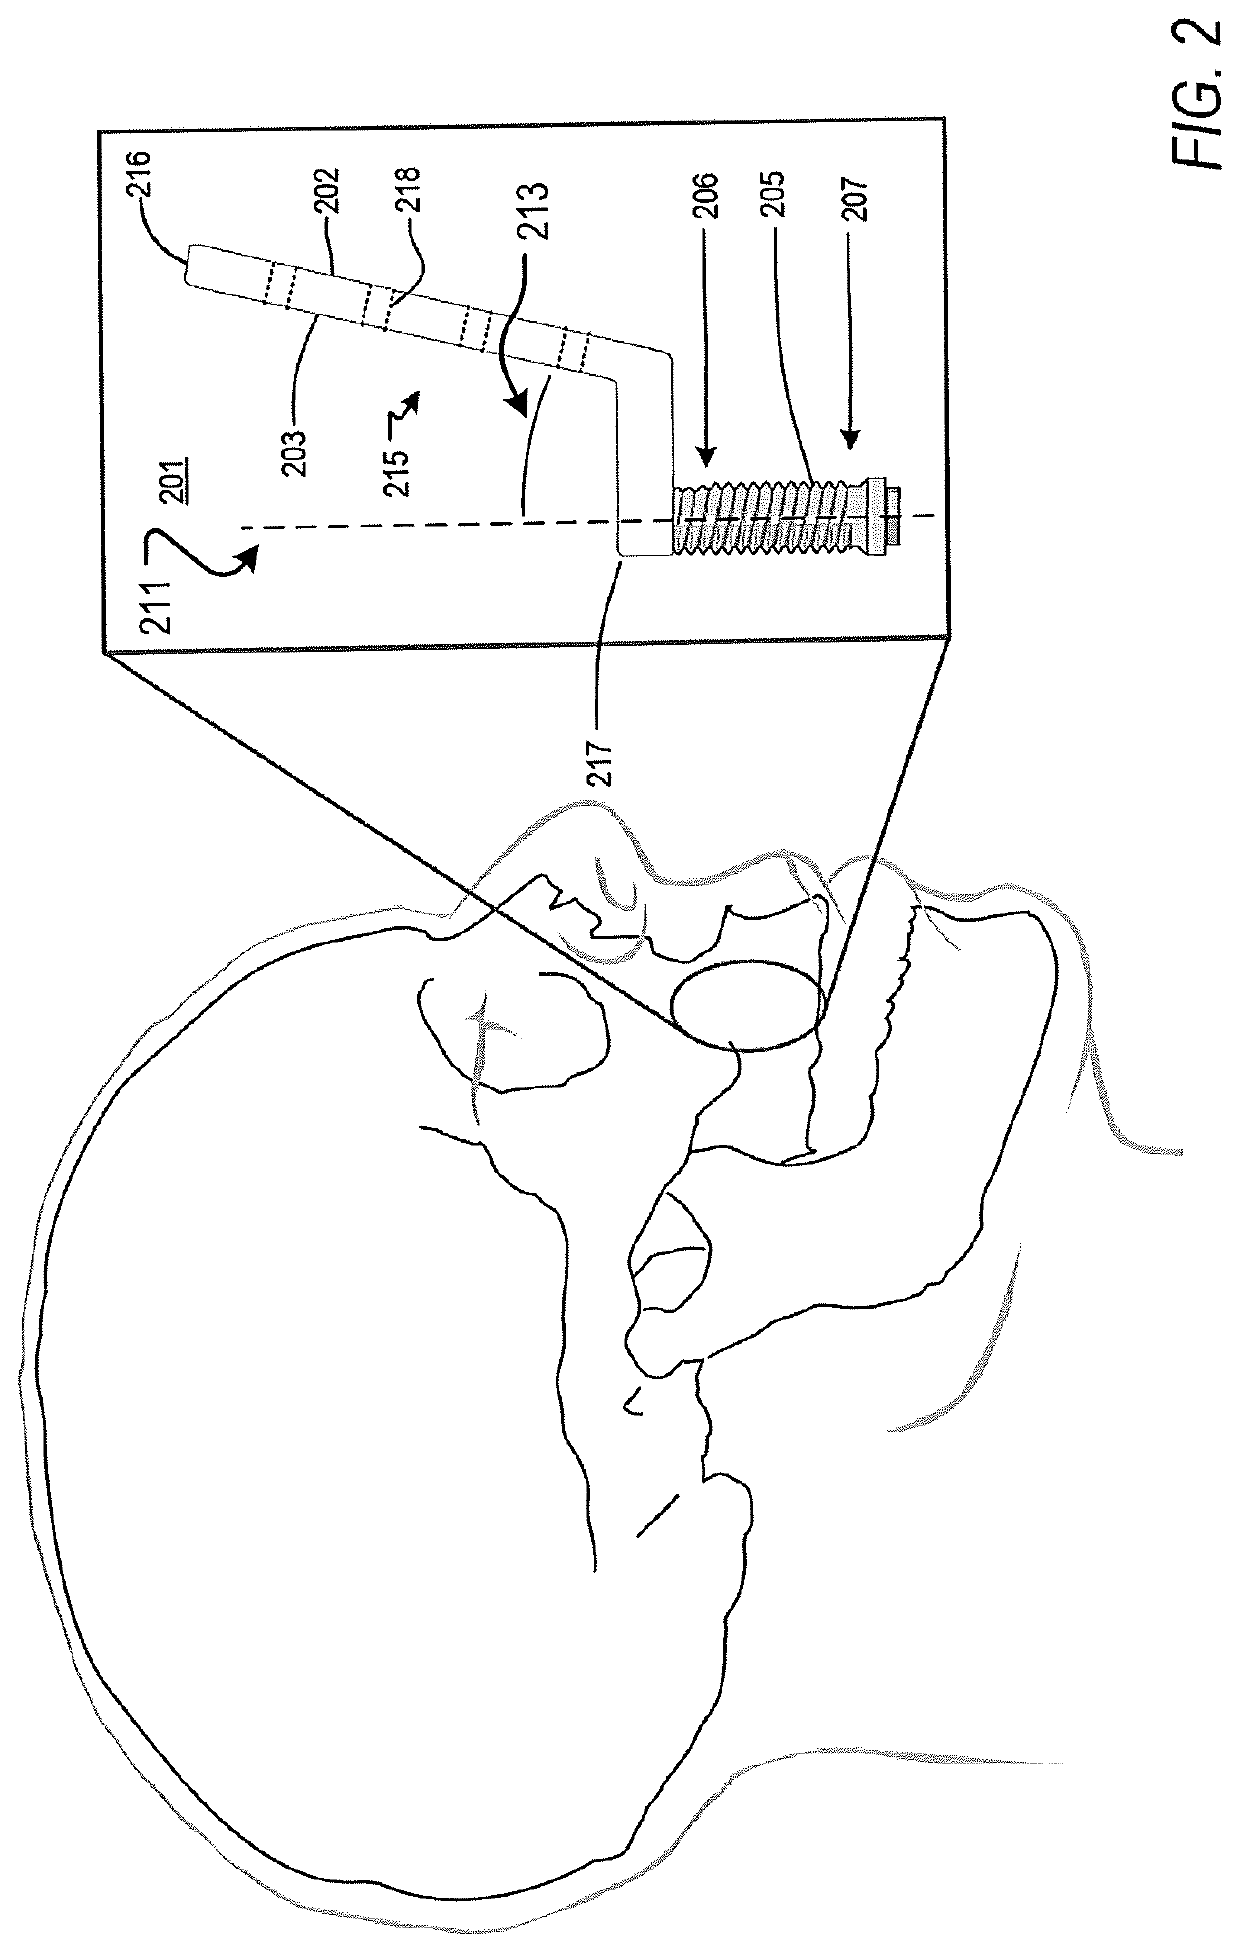 Apparatus and method for a transalveolar dental implant